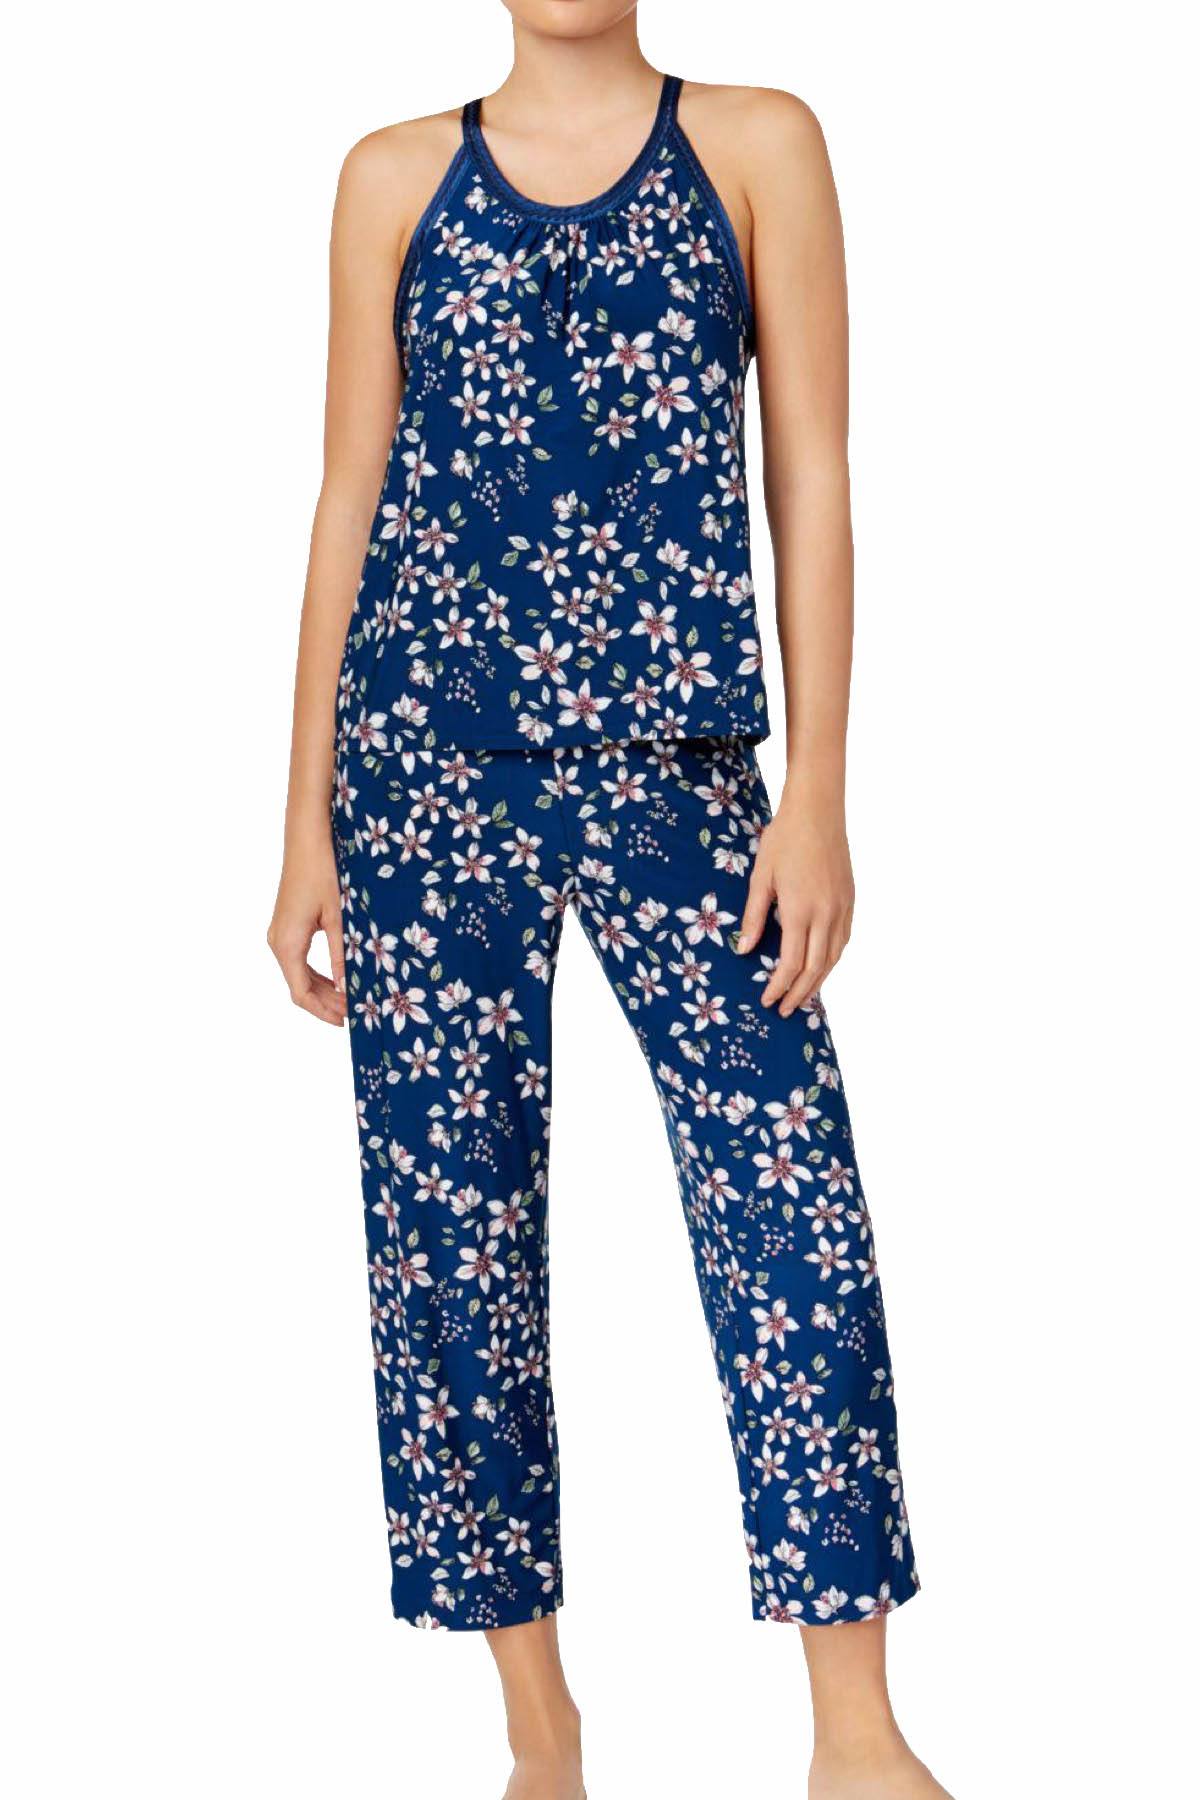 Alfani Intimates Teal Fall-Blossom Satin-Trimmed Printed Pajama 2-Piec ...